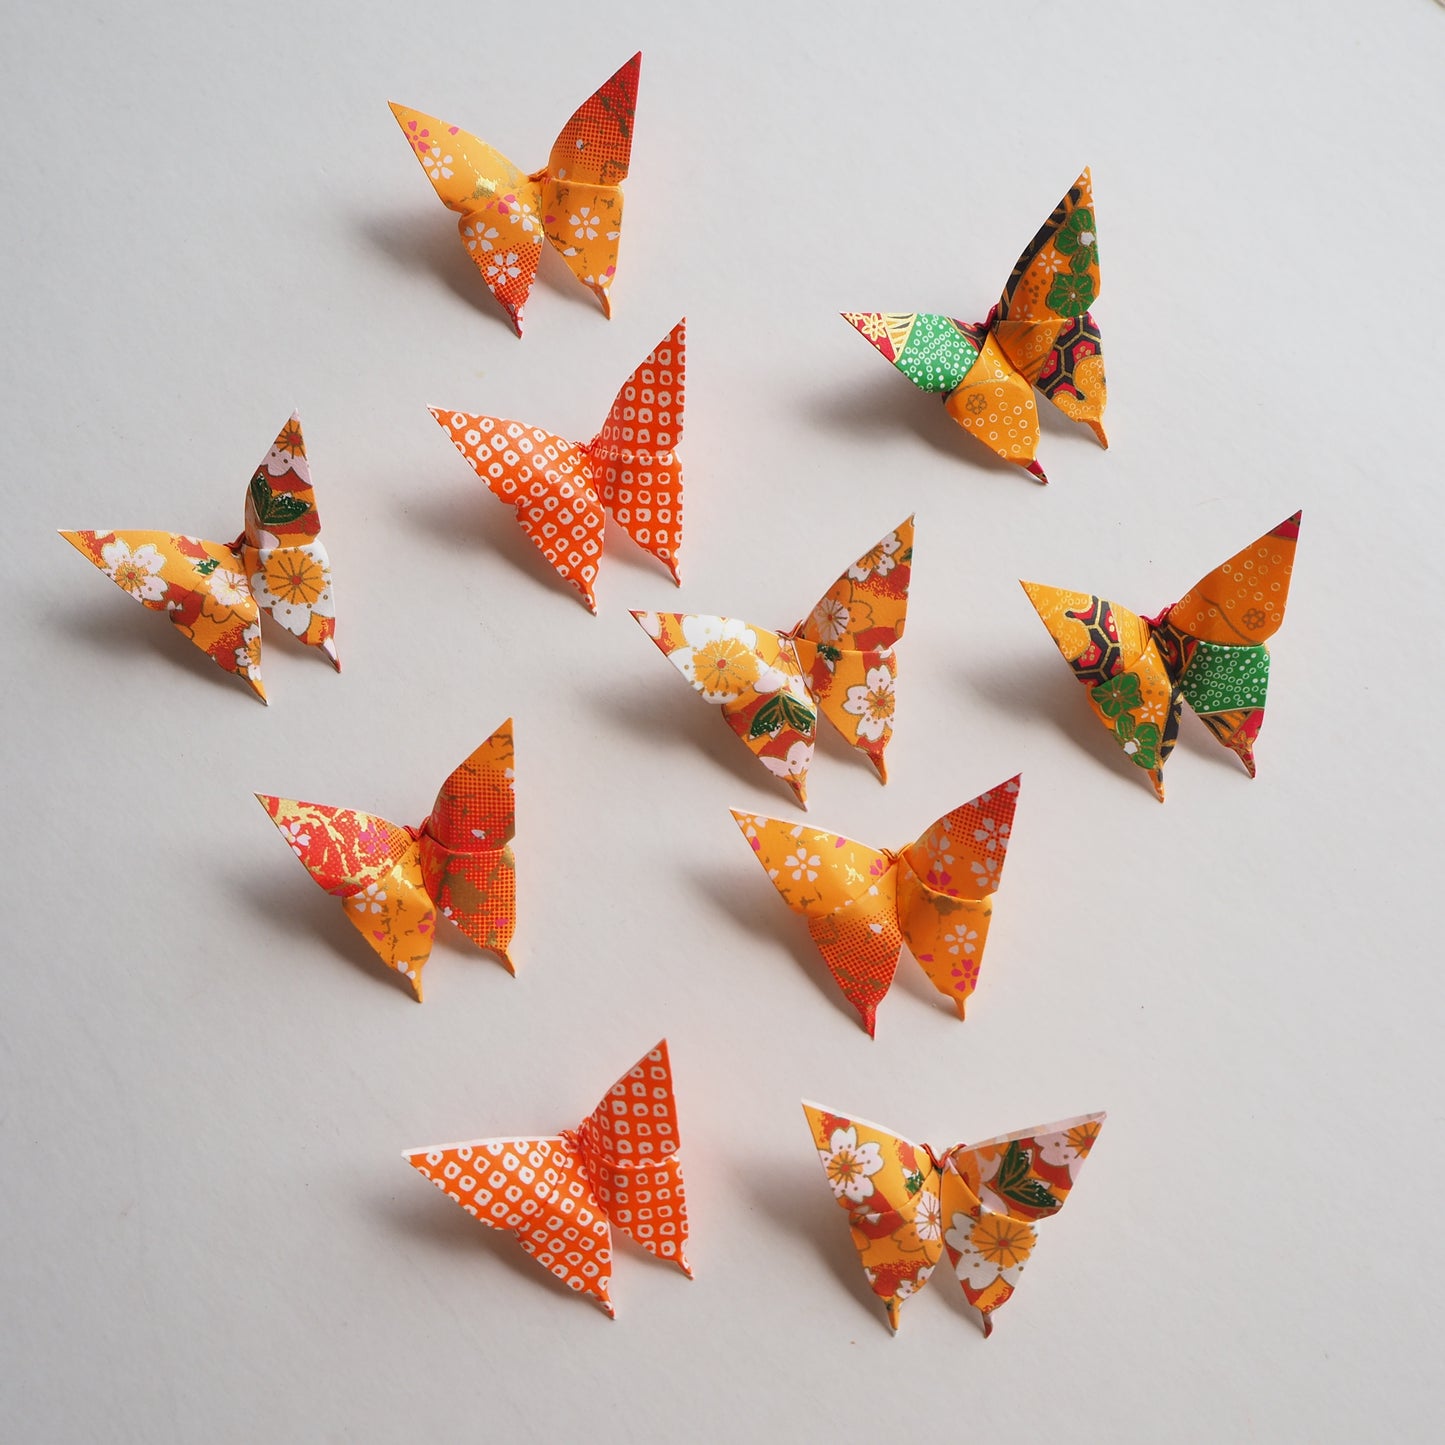 Pack of 10 Origami Paper Butterflies - Orange